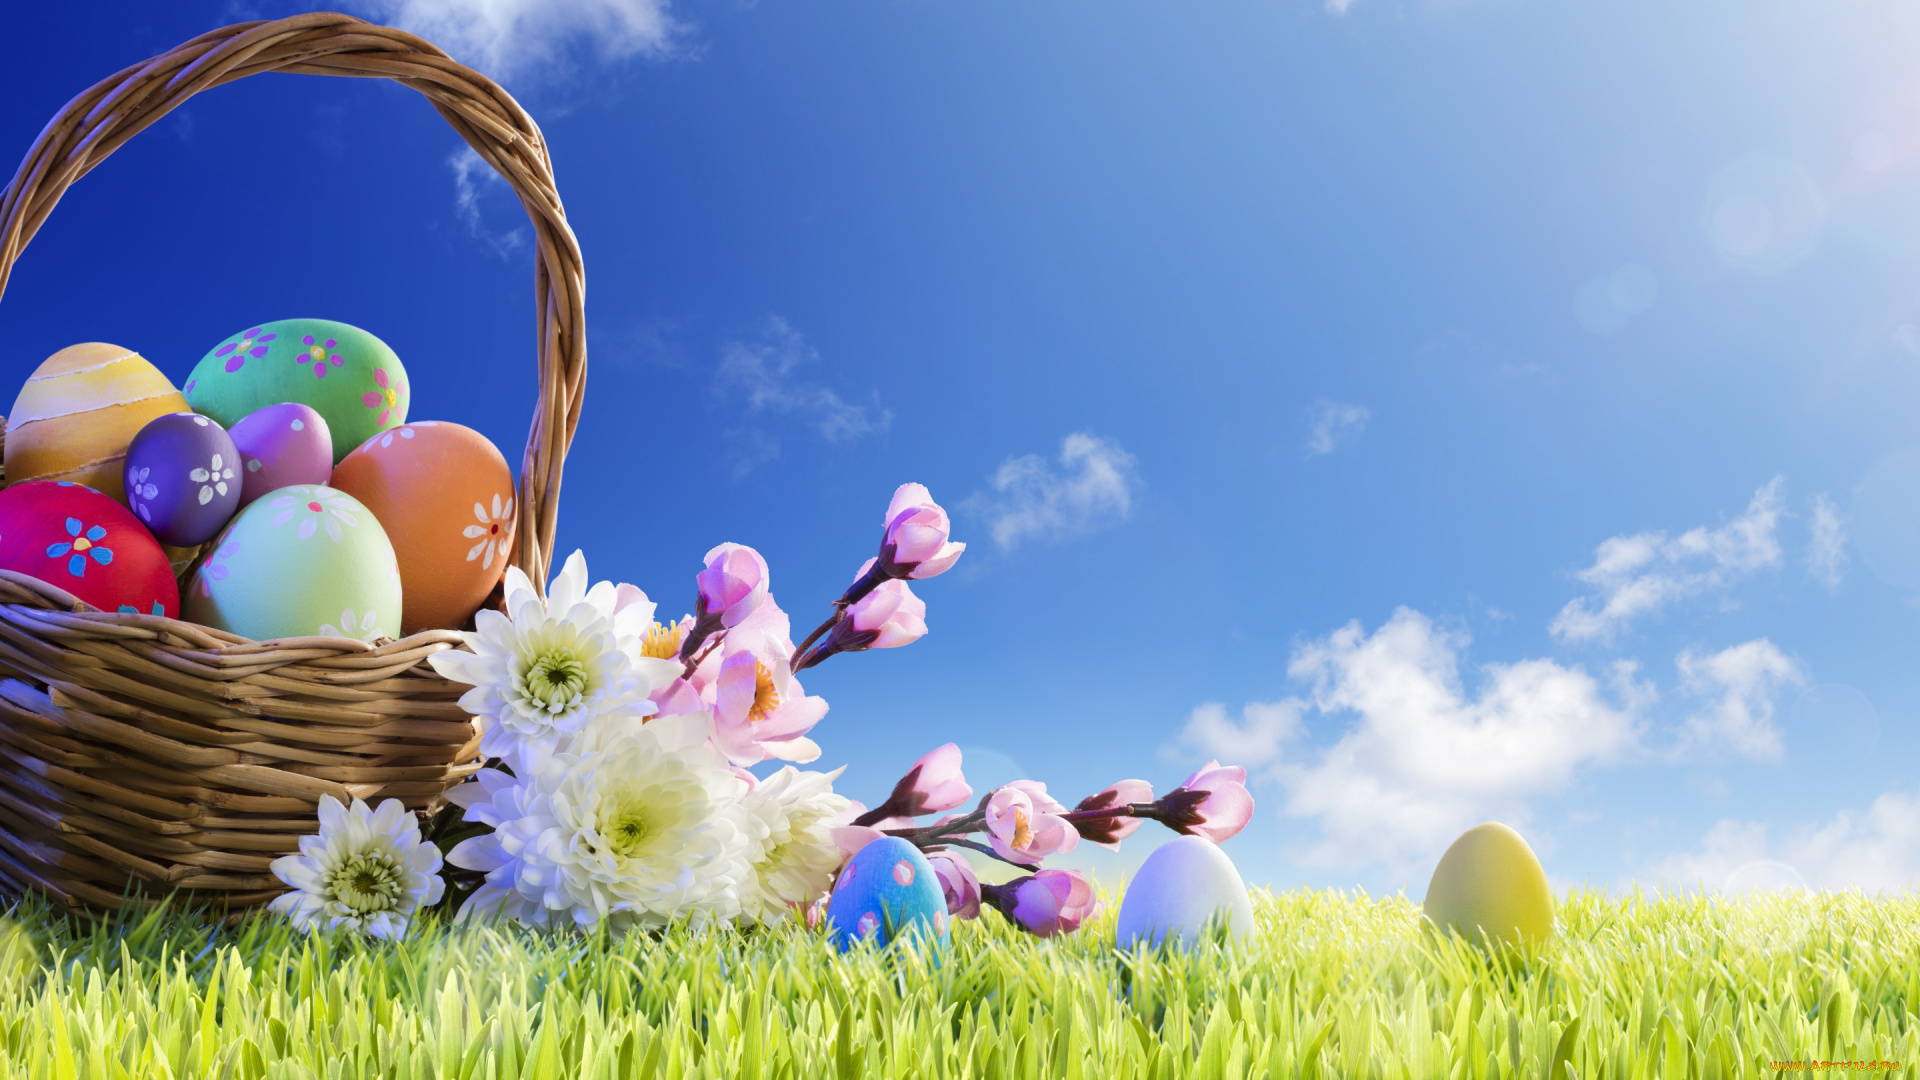 праздничные, пасха, весна, корзина, солнце, easter, трава, happy, цветы, яйца, крашеные, spring, flowers, eggs, decoration